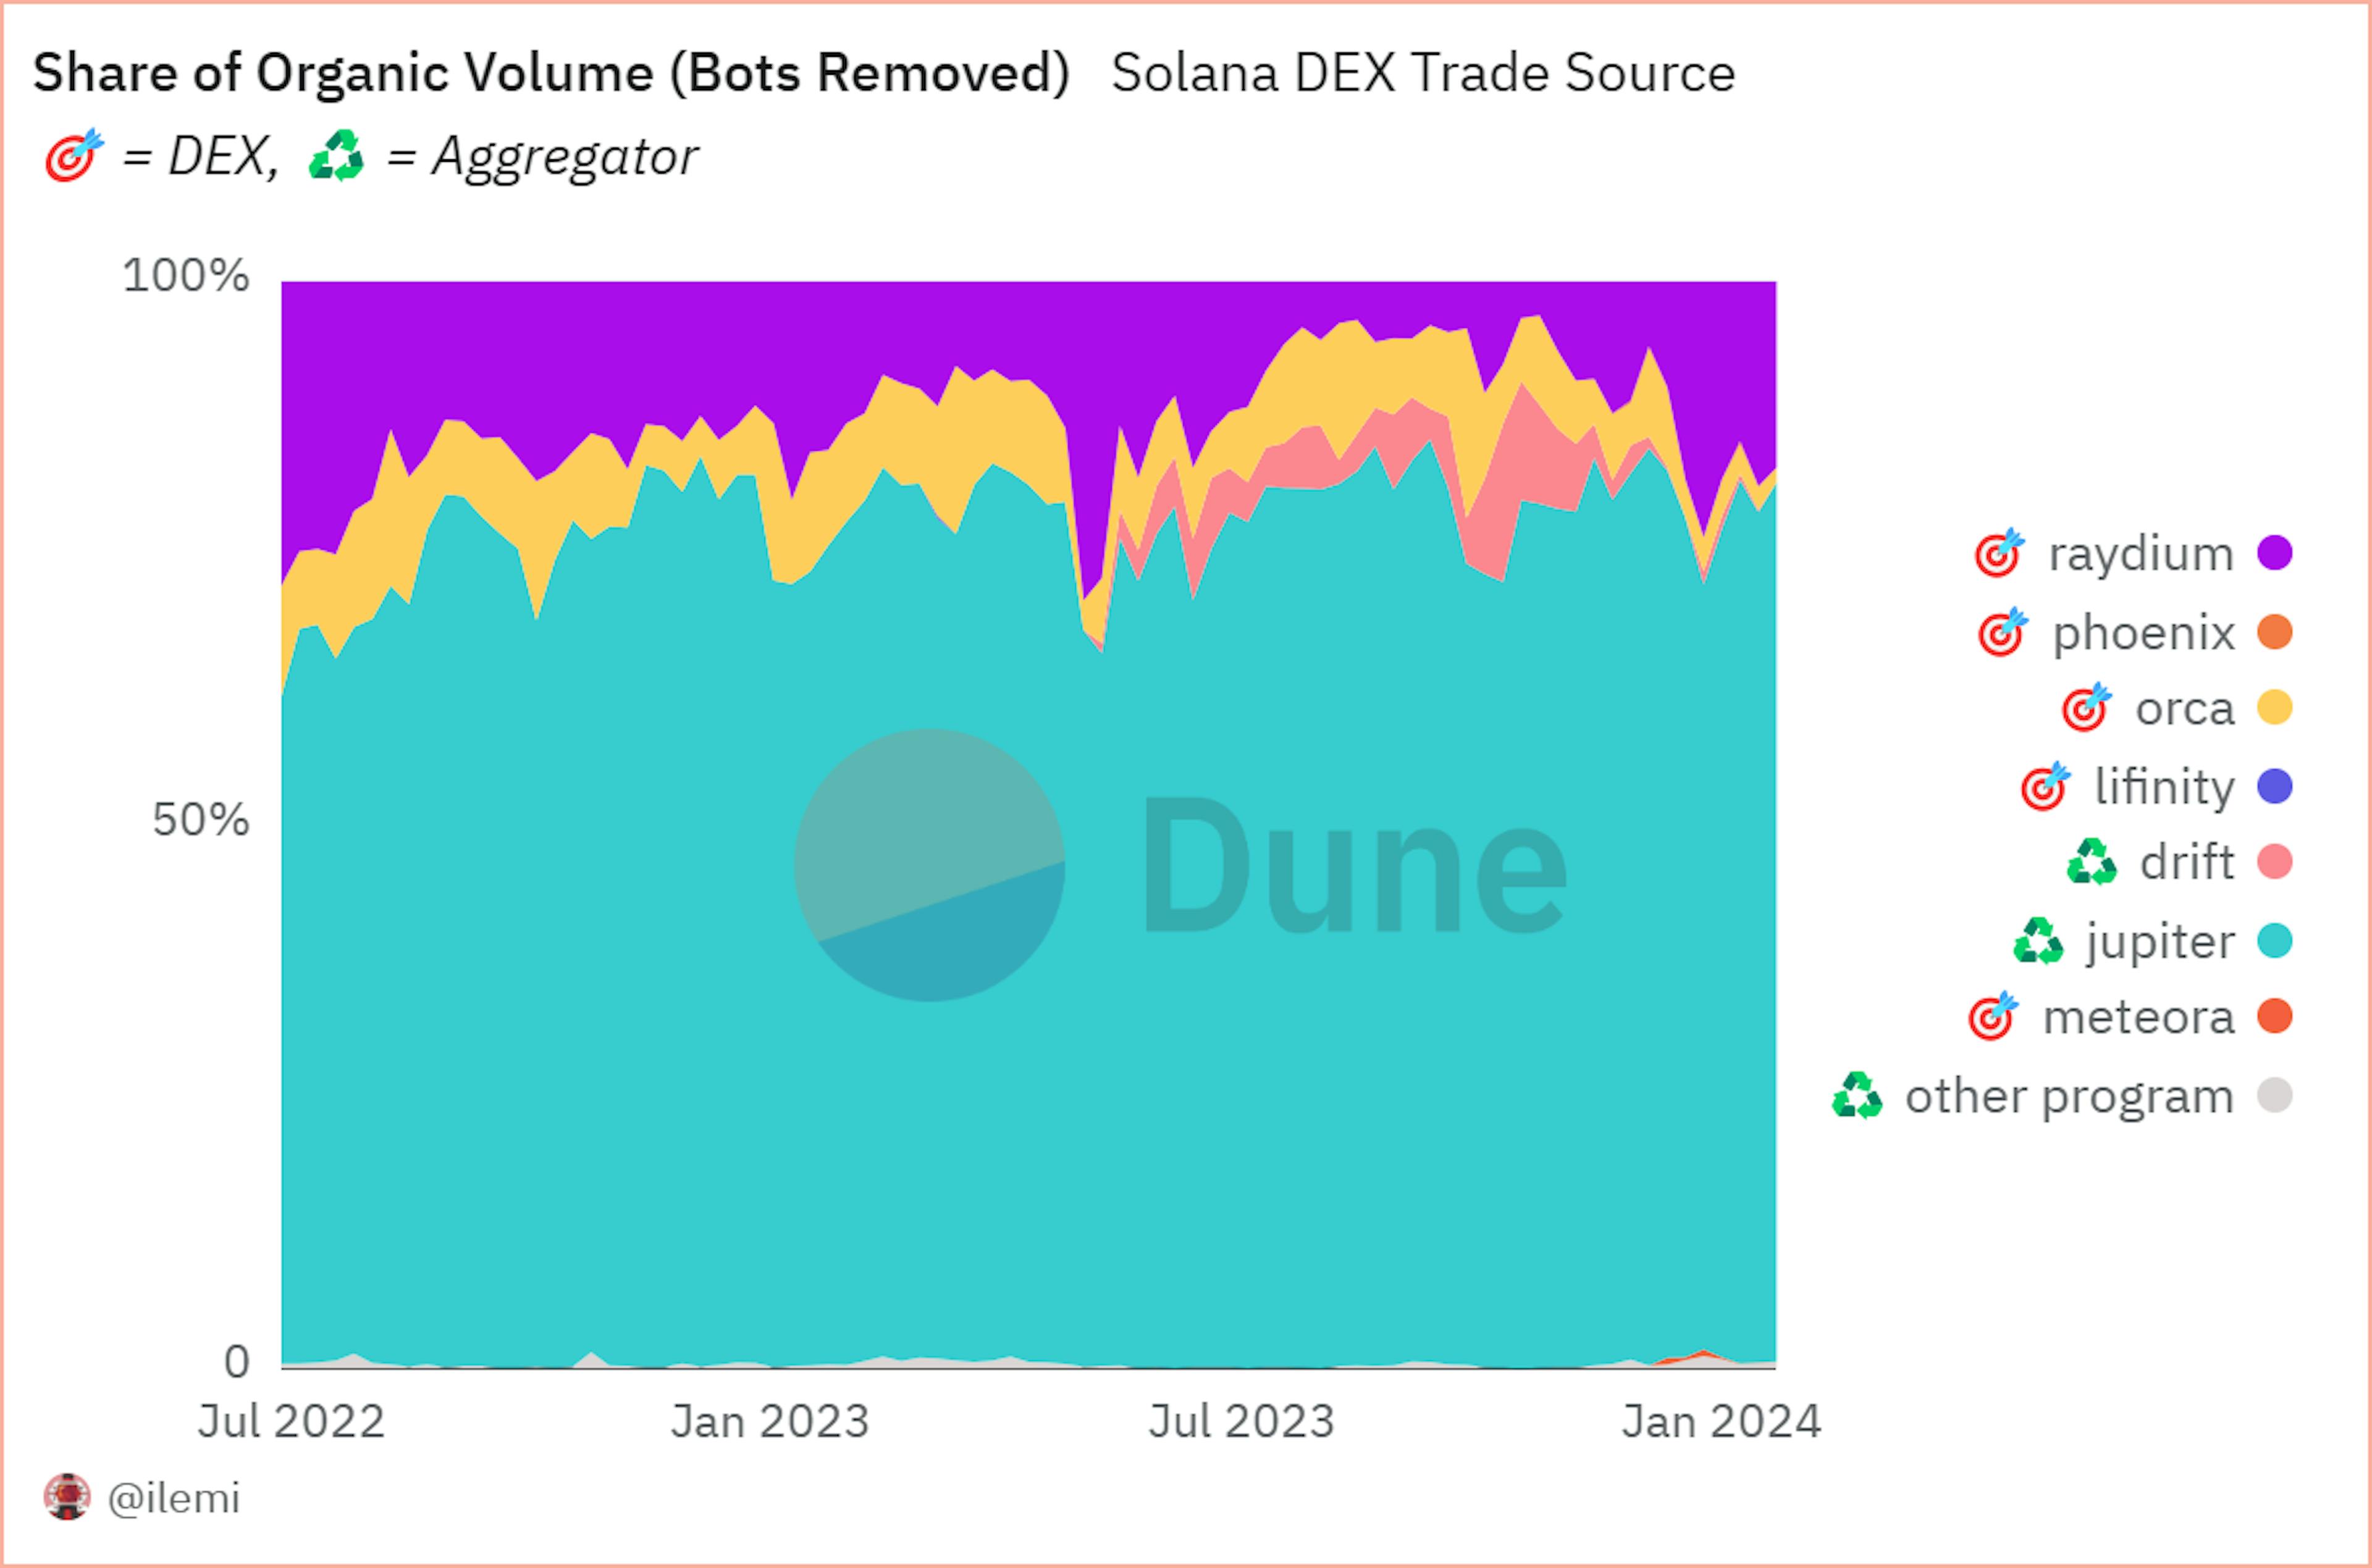 Share of organic volume Solana DEX trade source